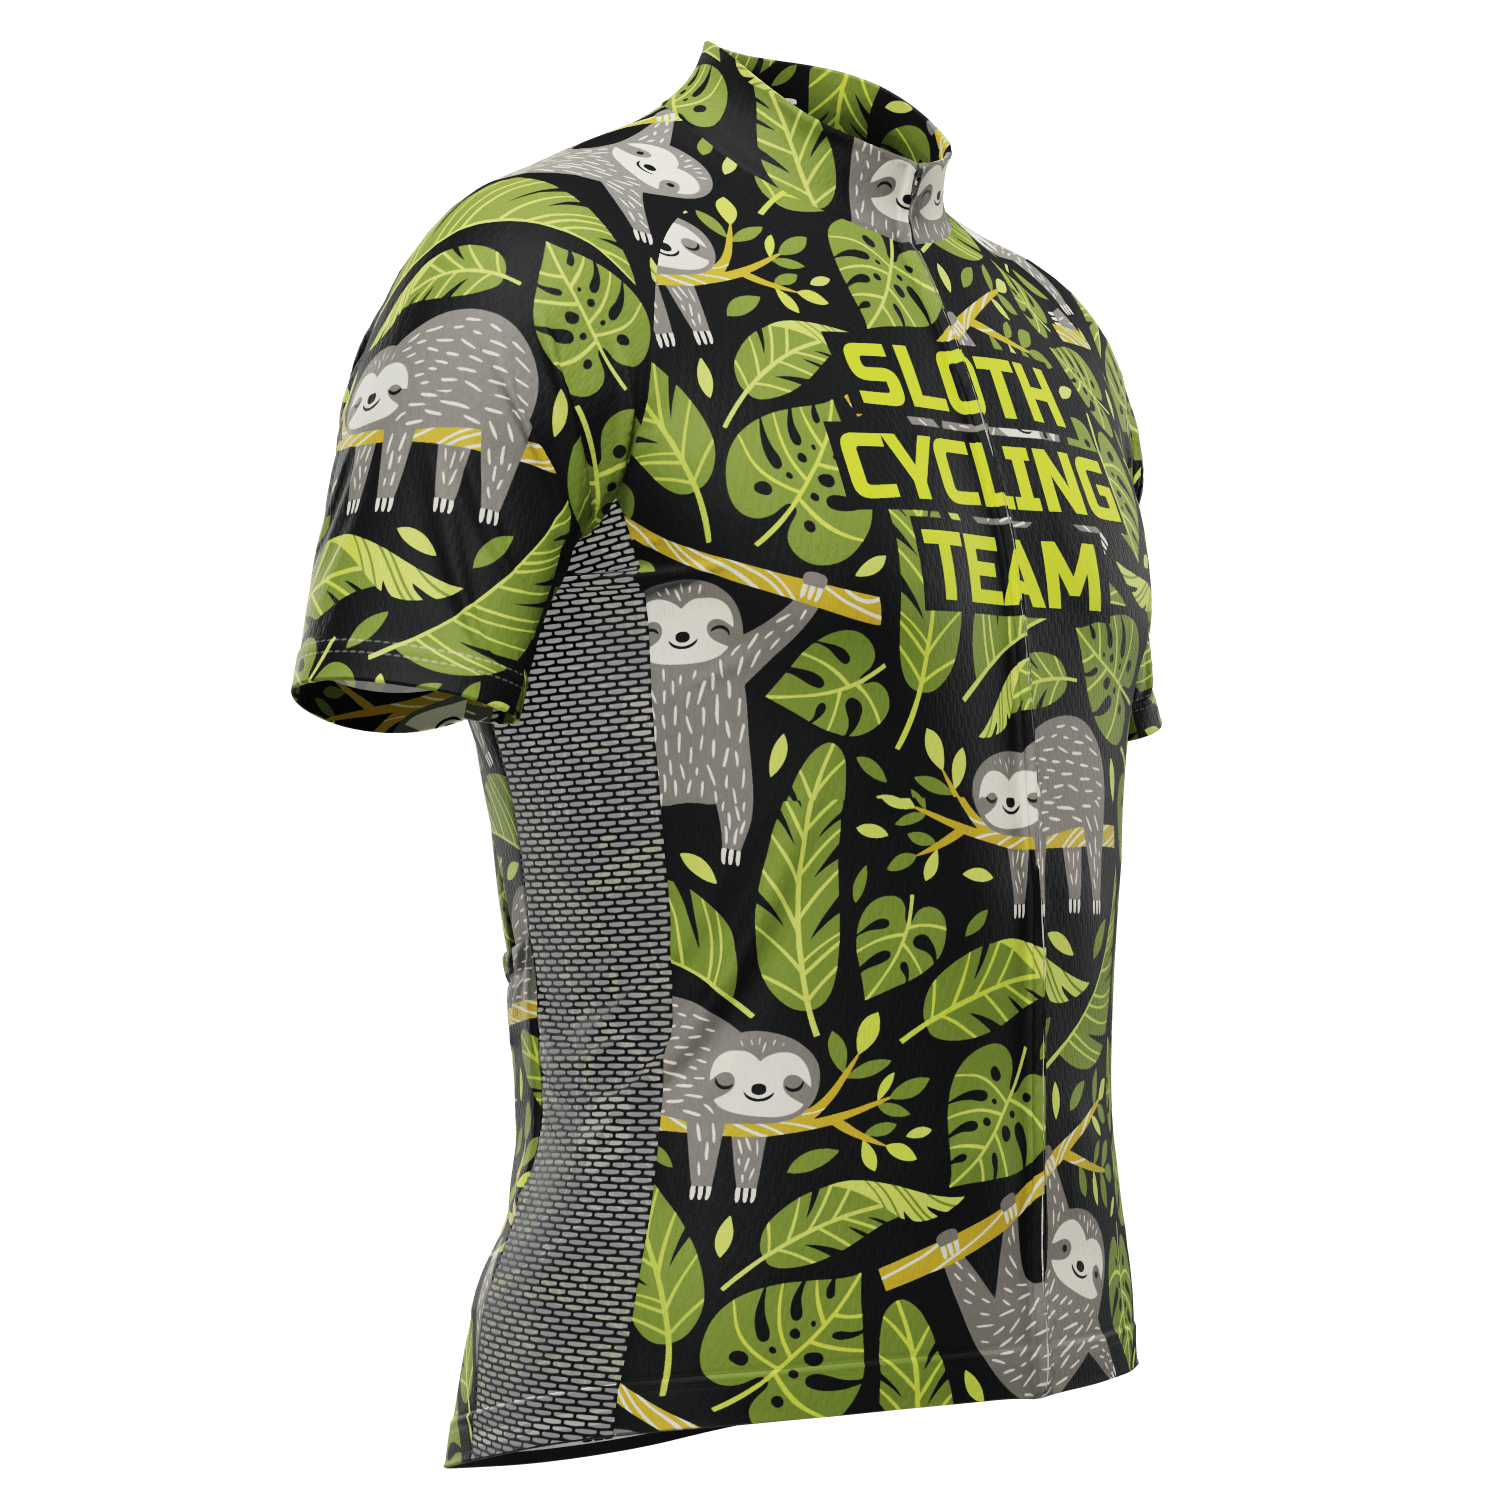 Men's Sloth Cycling Team Short Sleeve Cycling Jersey